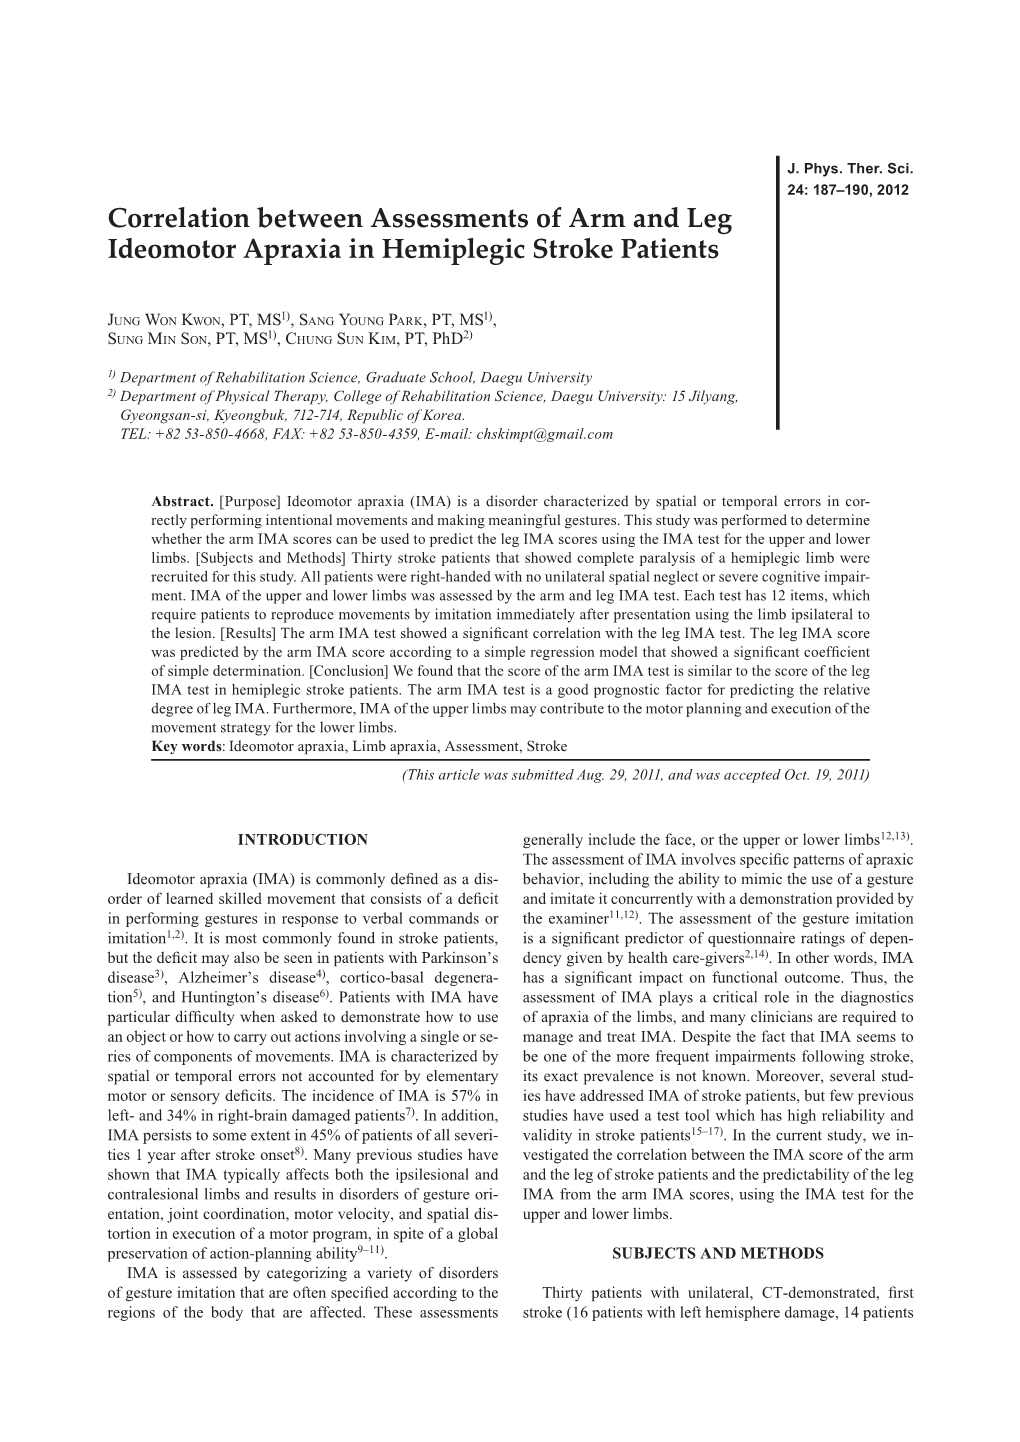 Correlation Between Assessments of Arm and Leg Ideomotor Apraxia in Hemiplegic Stroke Patients